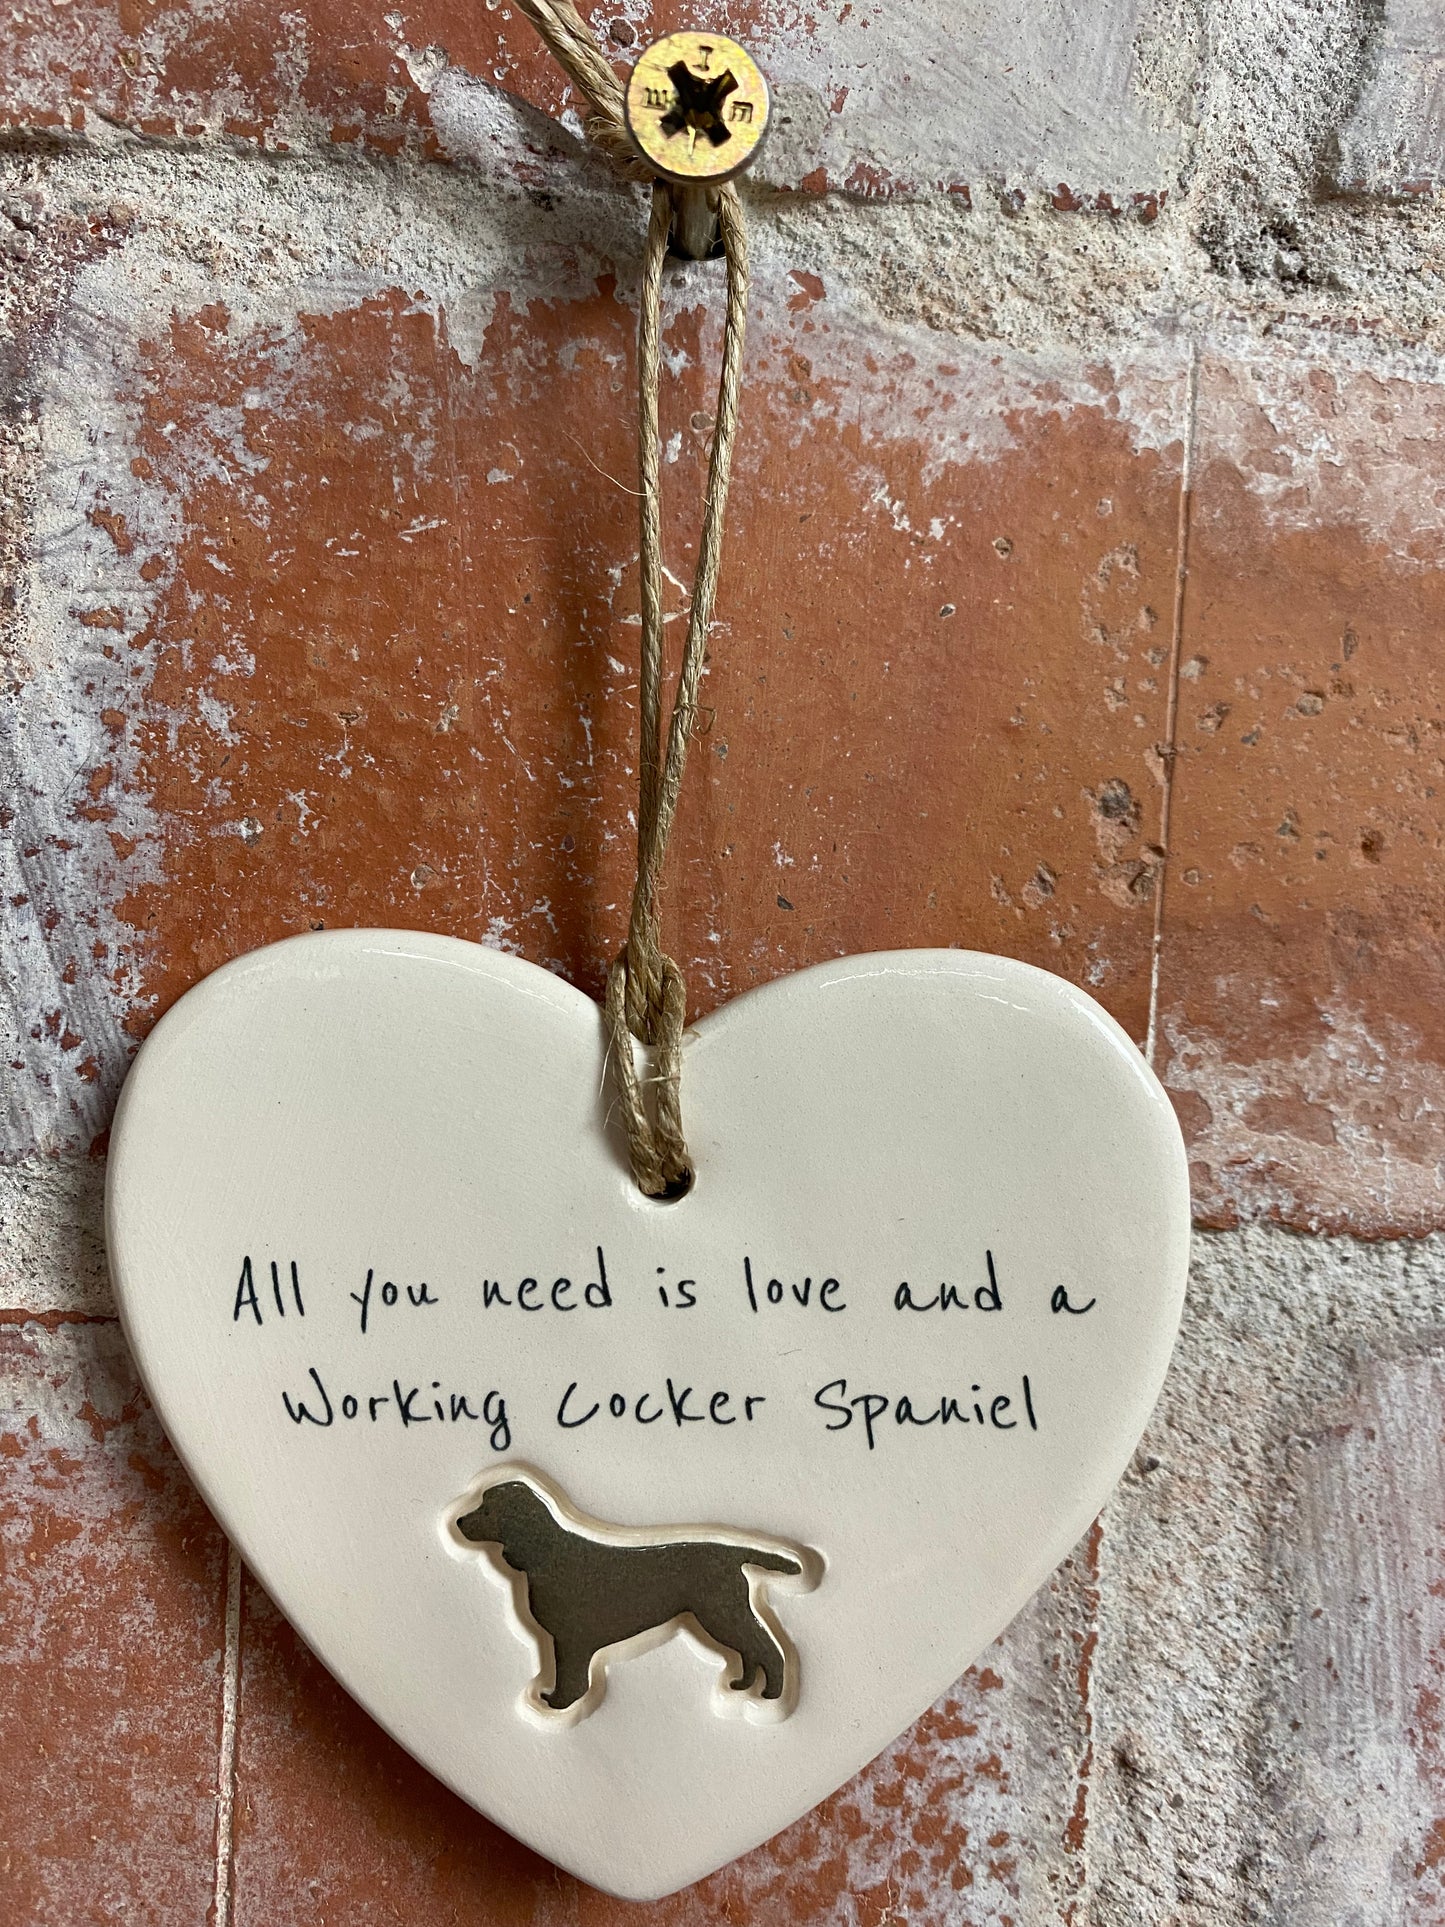 Working Cocker Spaniel ceramic heart